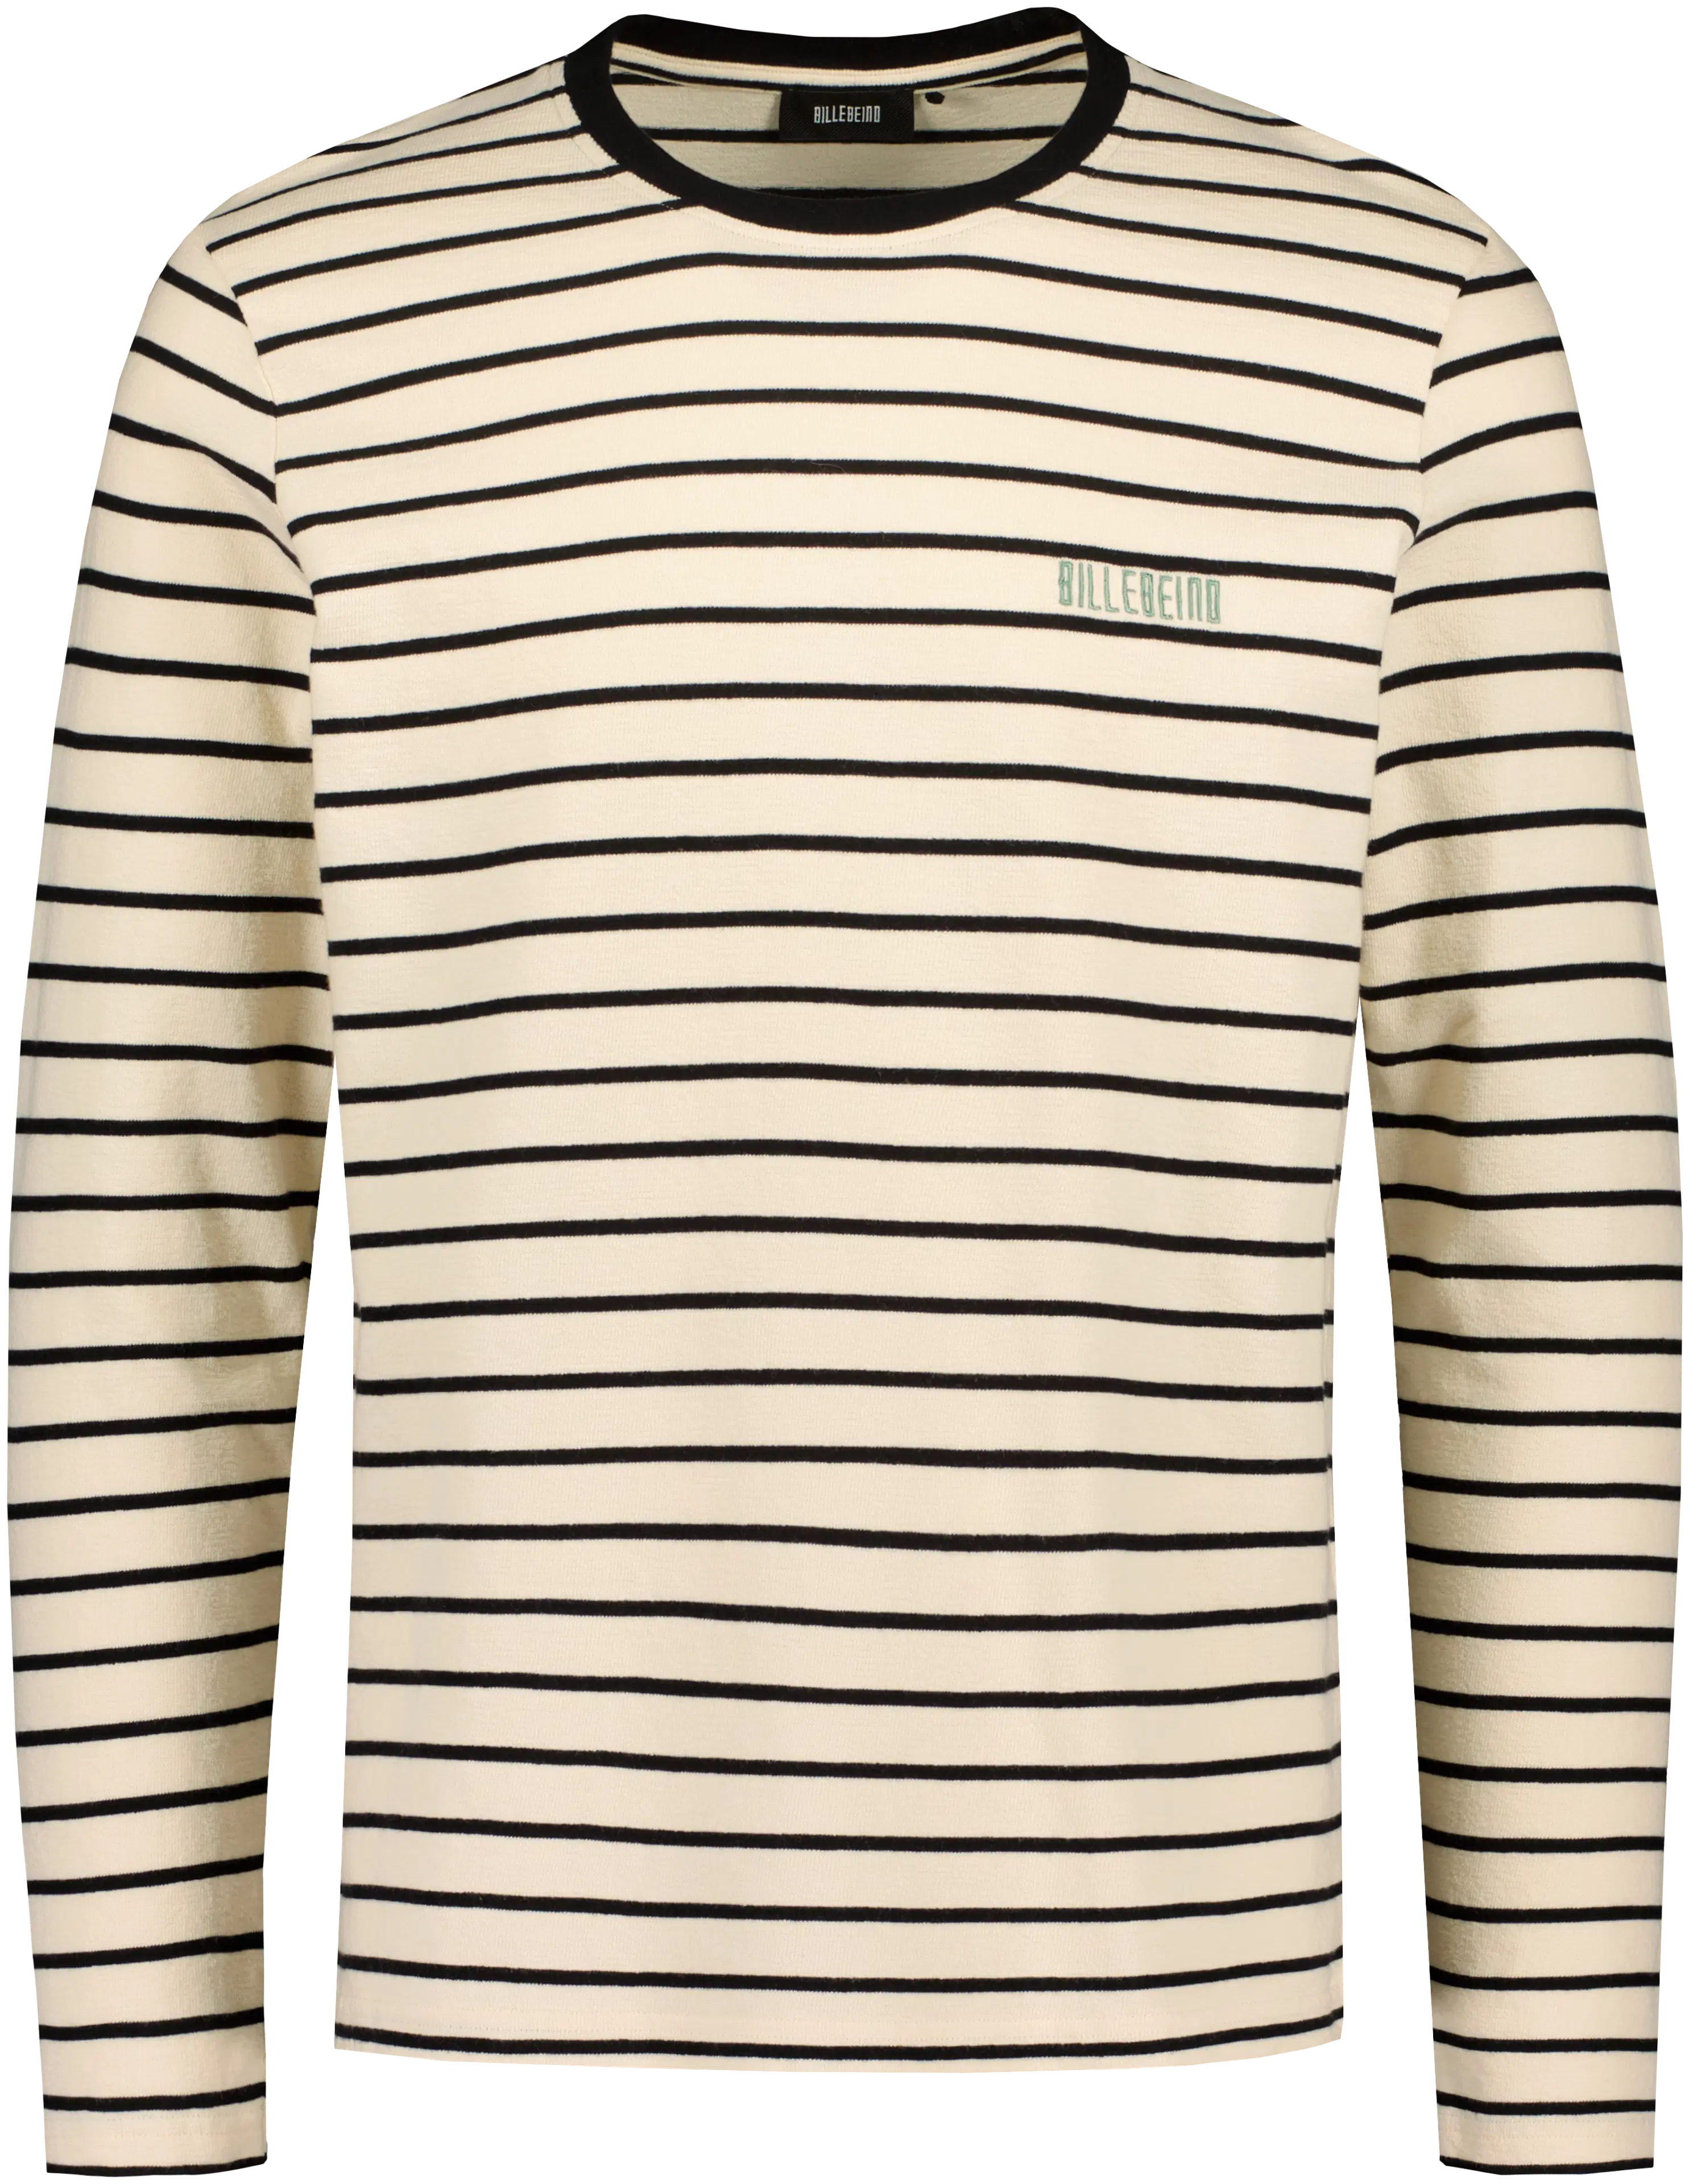 Billebeino Striped pitkähihainen paita